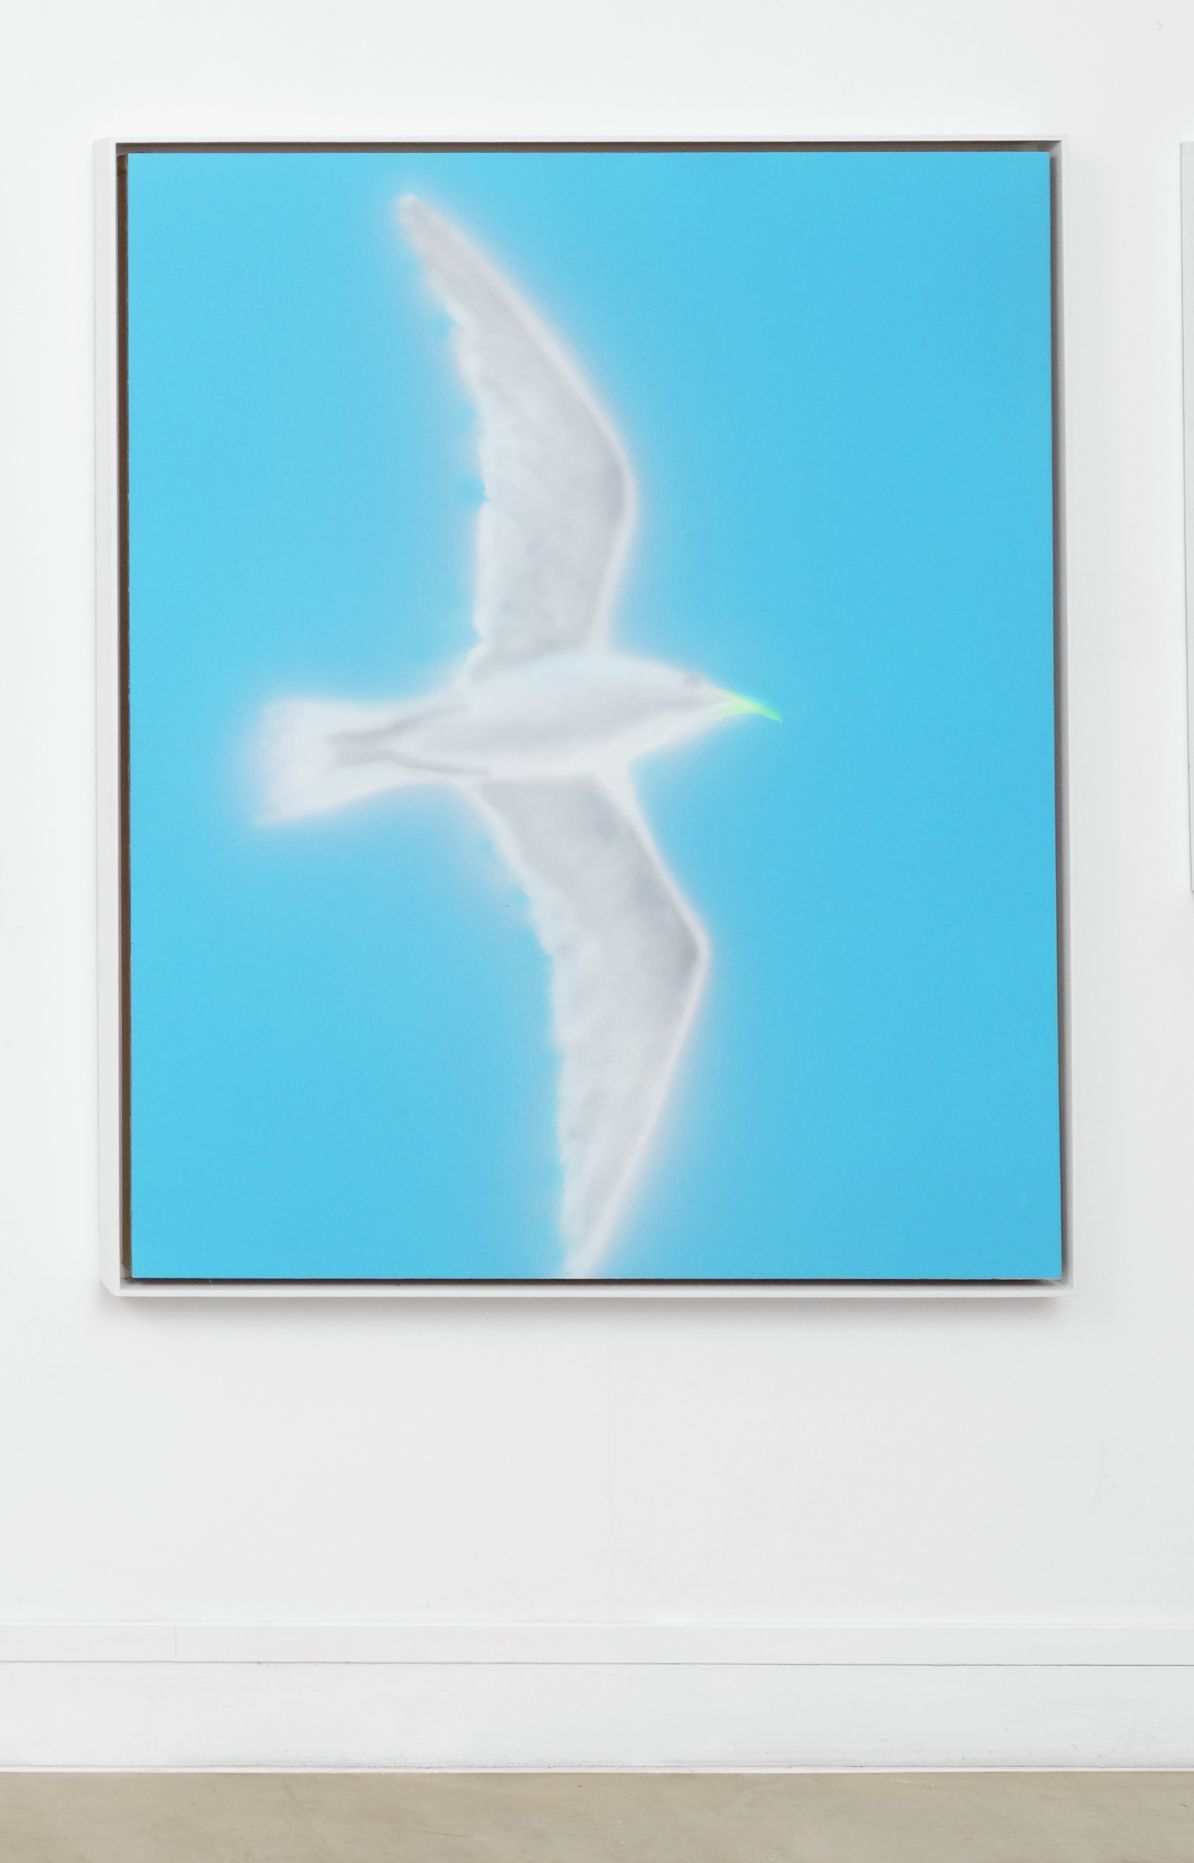 Kevin Ford, Big Gull, 2020 Acrylique sur panneau117 × 99 cm / 46,5 × 39,25 in. | 120.5 × 100 cm / 474 3/8 × 39 3/8 in. (encadré/framed)